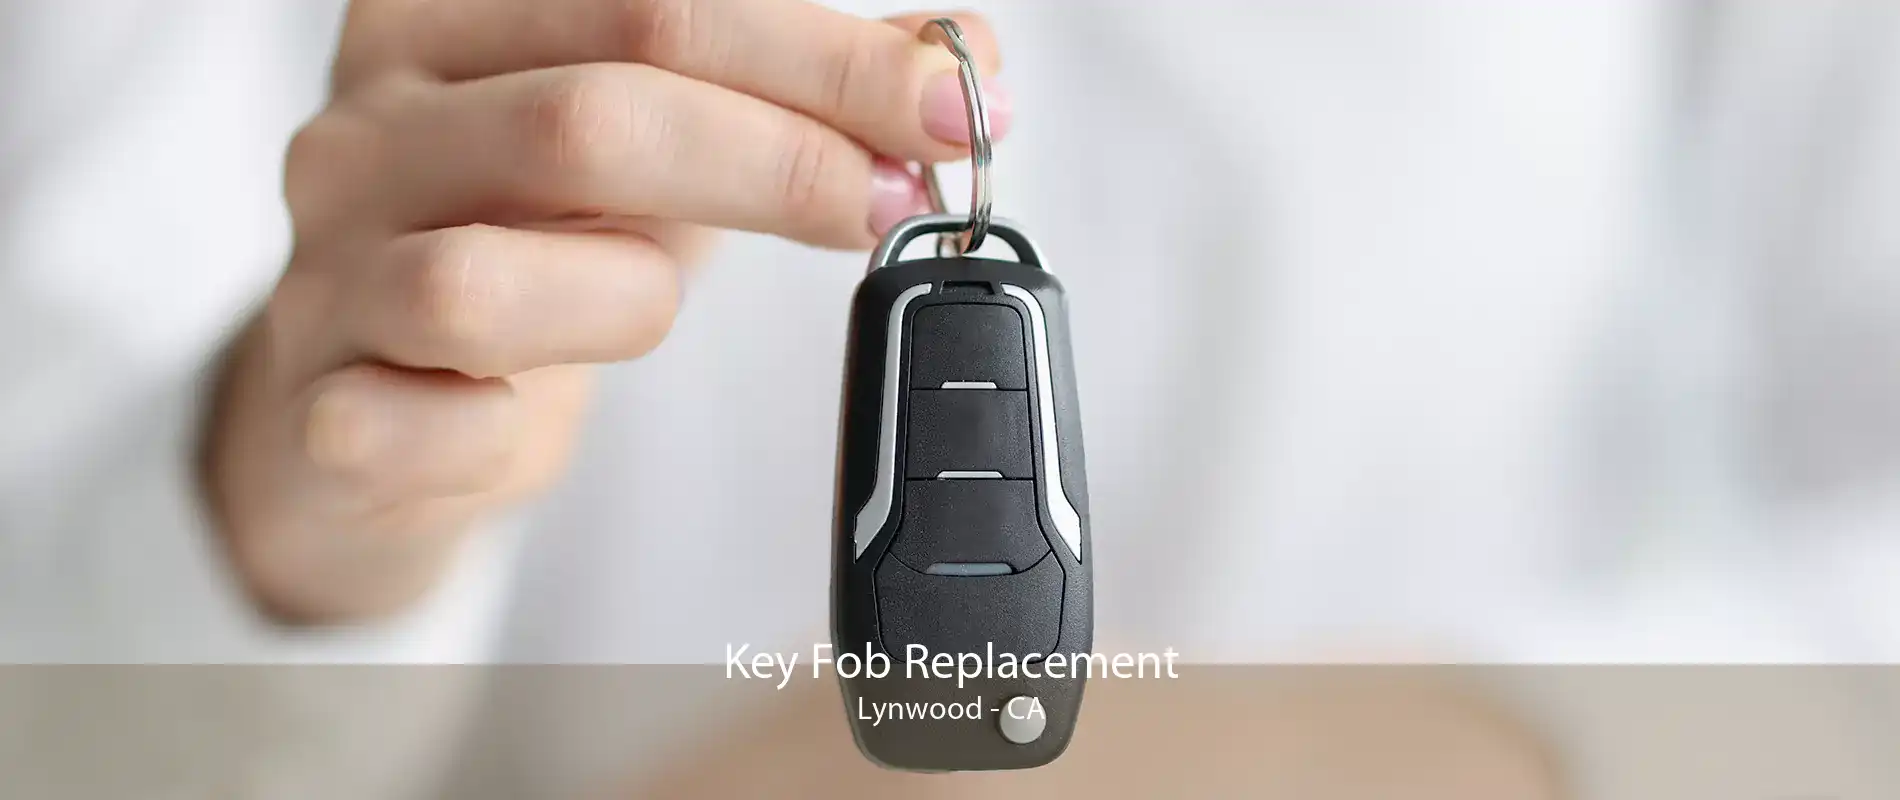 Key Fob Replacement Lynwood - CA